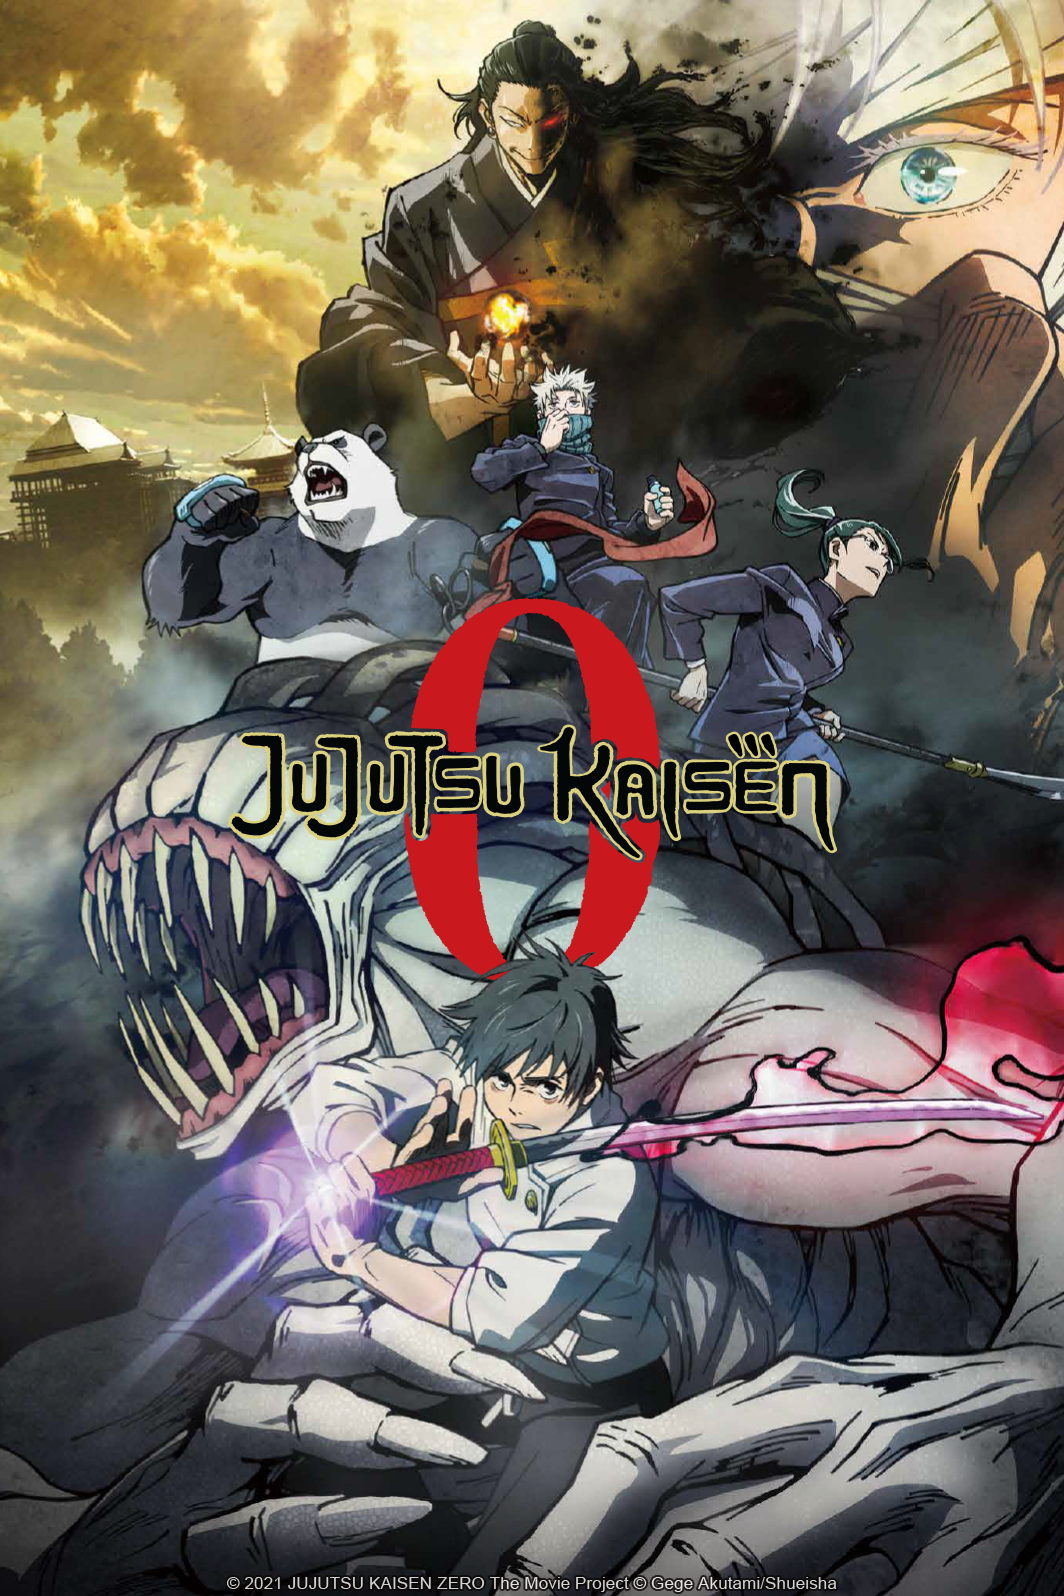 jujutsu kaisen 0 movie streaming on crunchyroll key visual